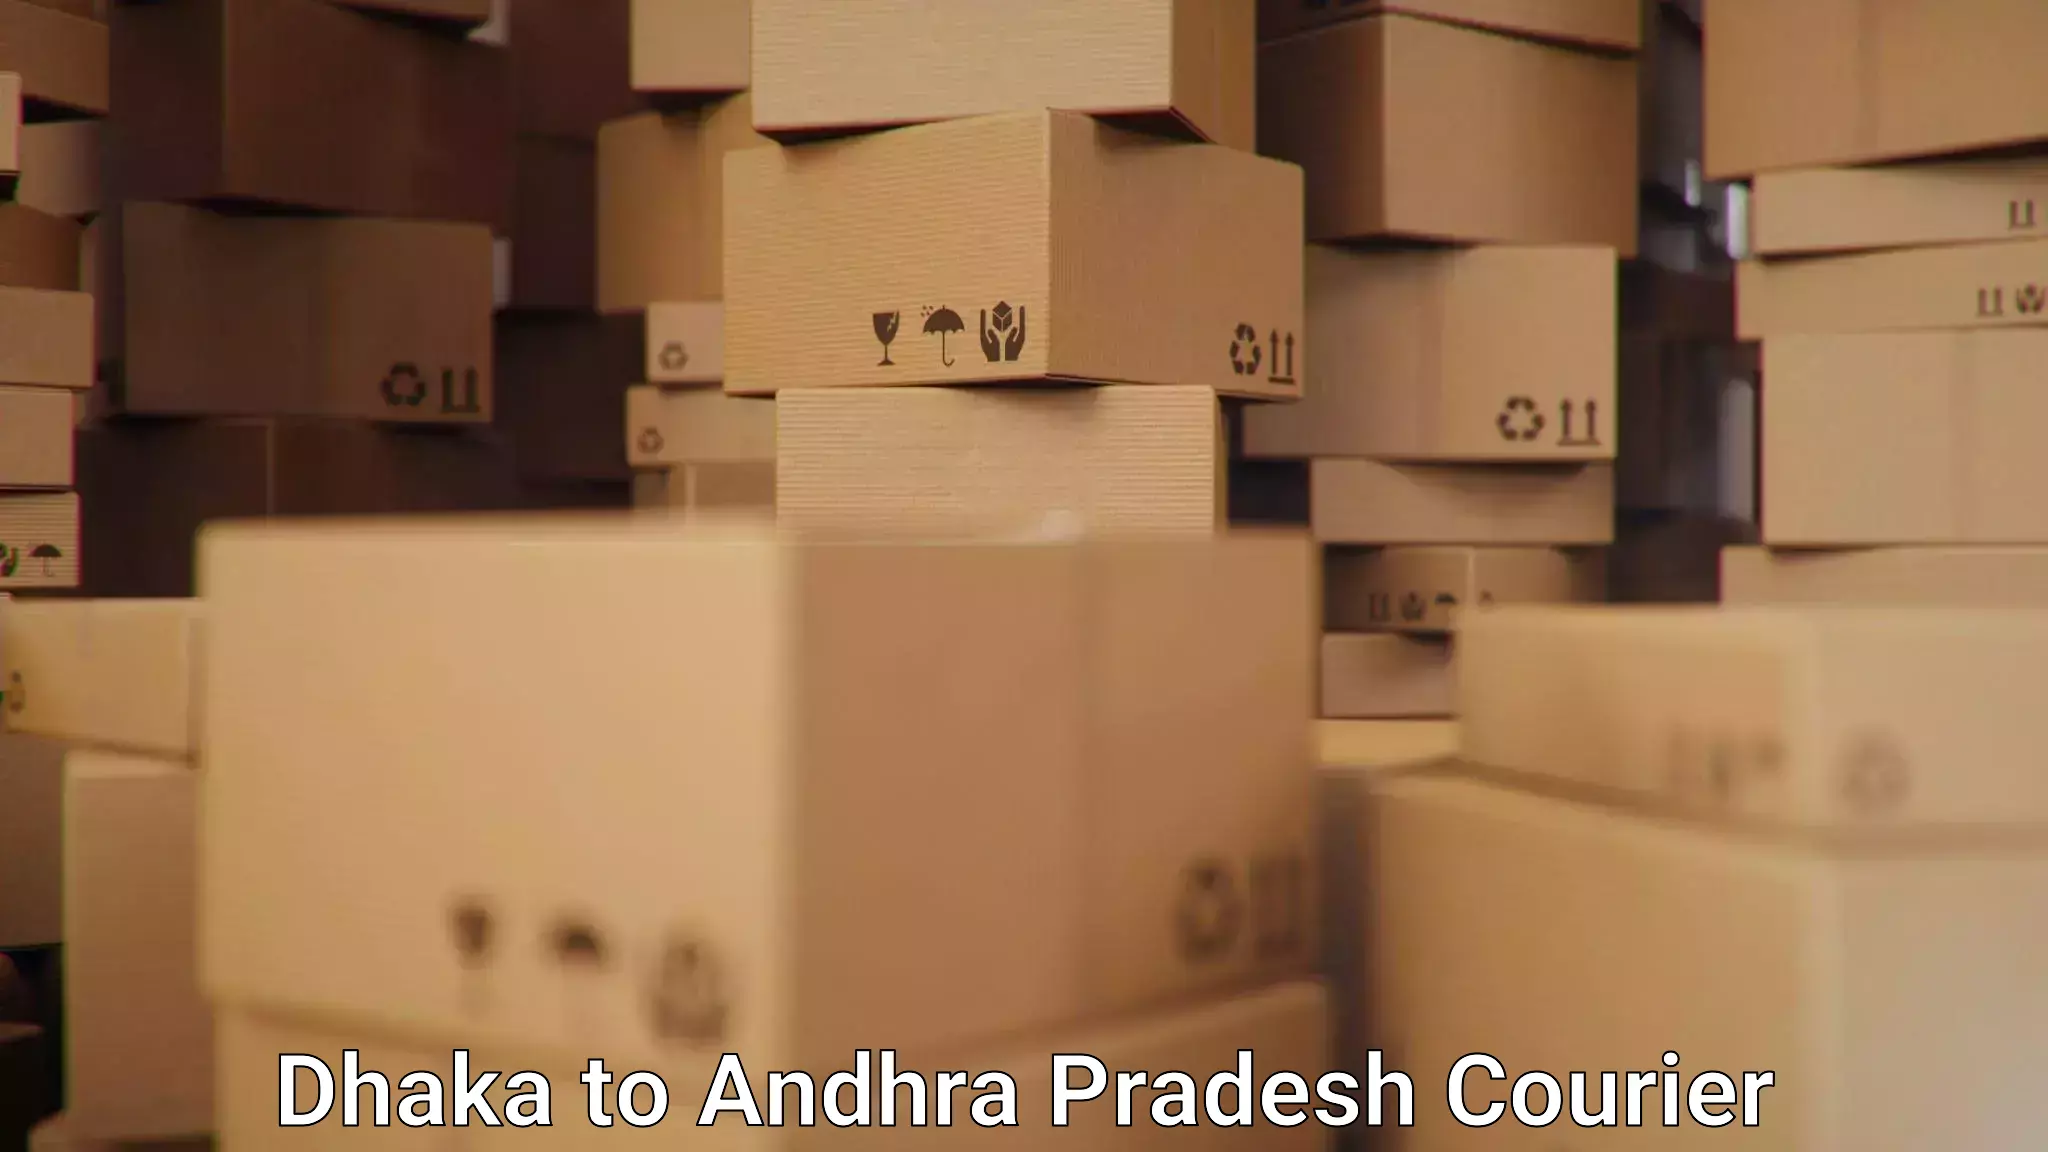 Efficient order fulfillment in Dhaka to Andhra Pradesh